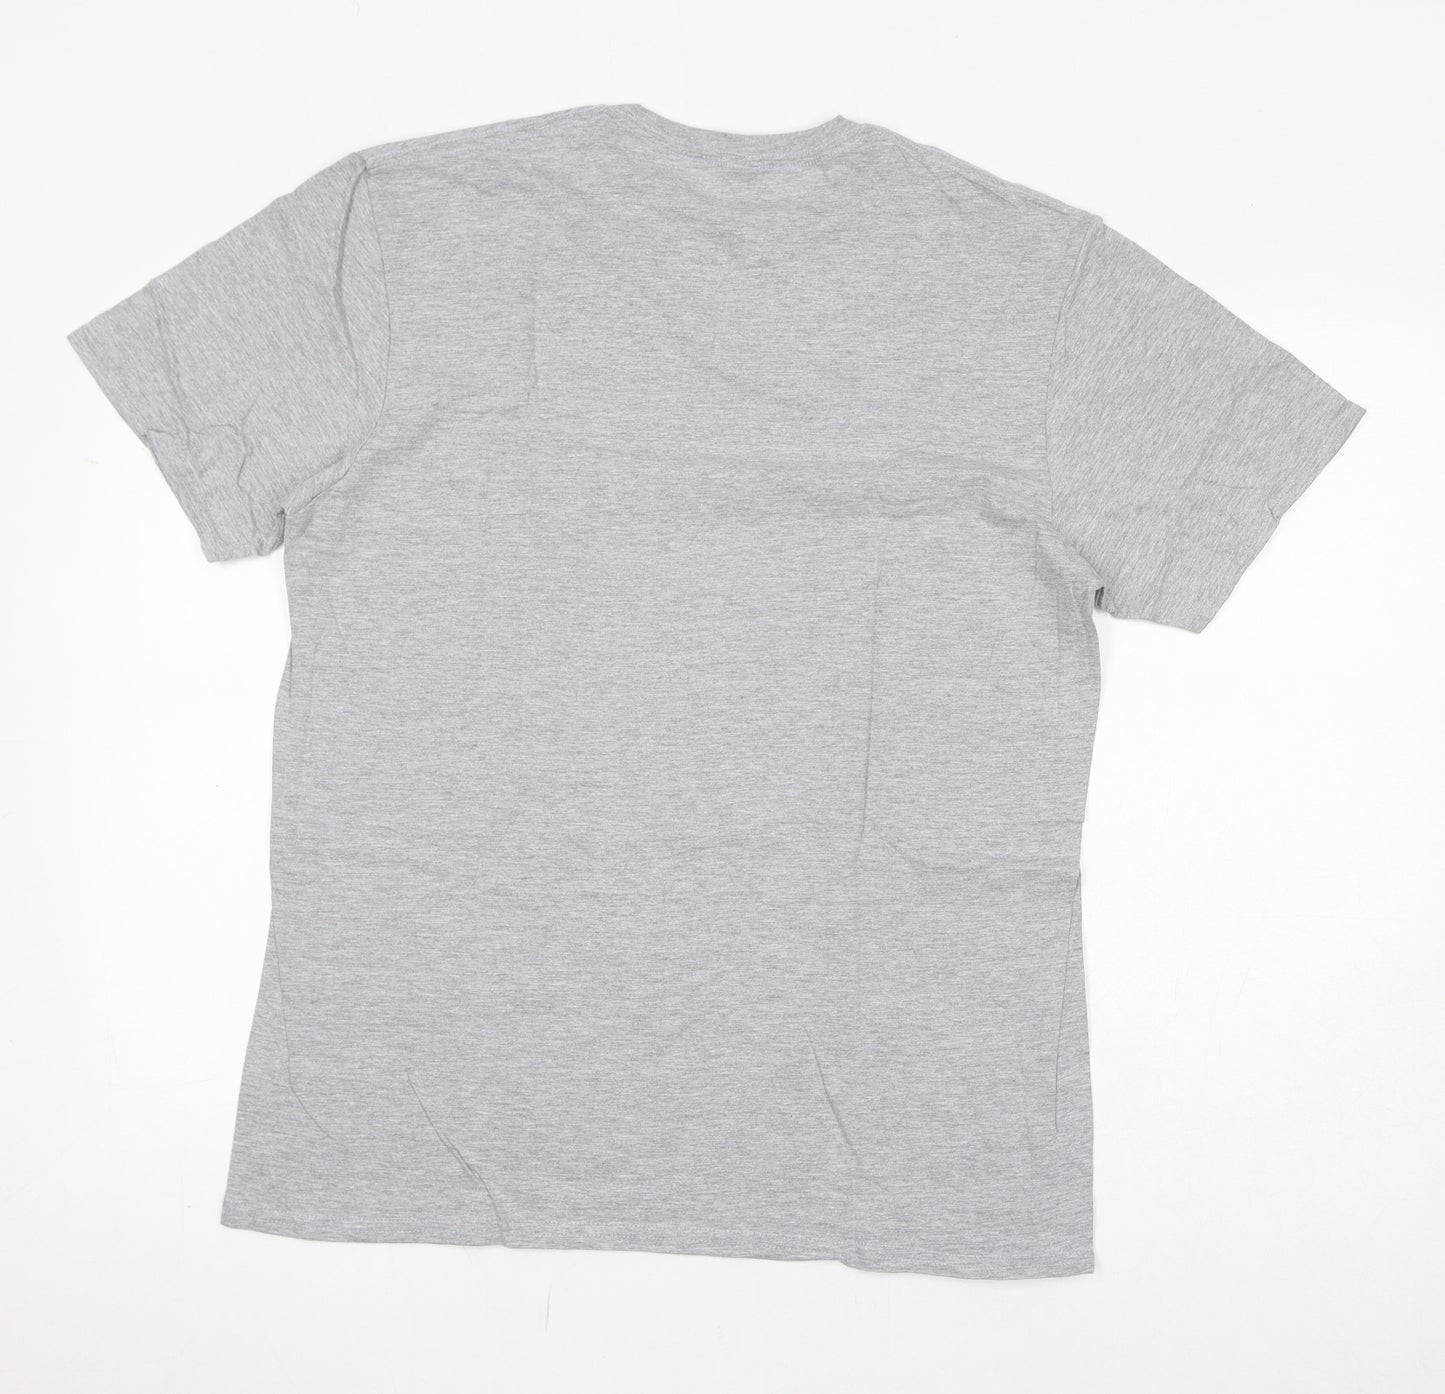 Gildan Womens Grey Cotton Basic T-Shirt Size L Round Neck - Nostromo Weyland/Yutani